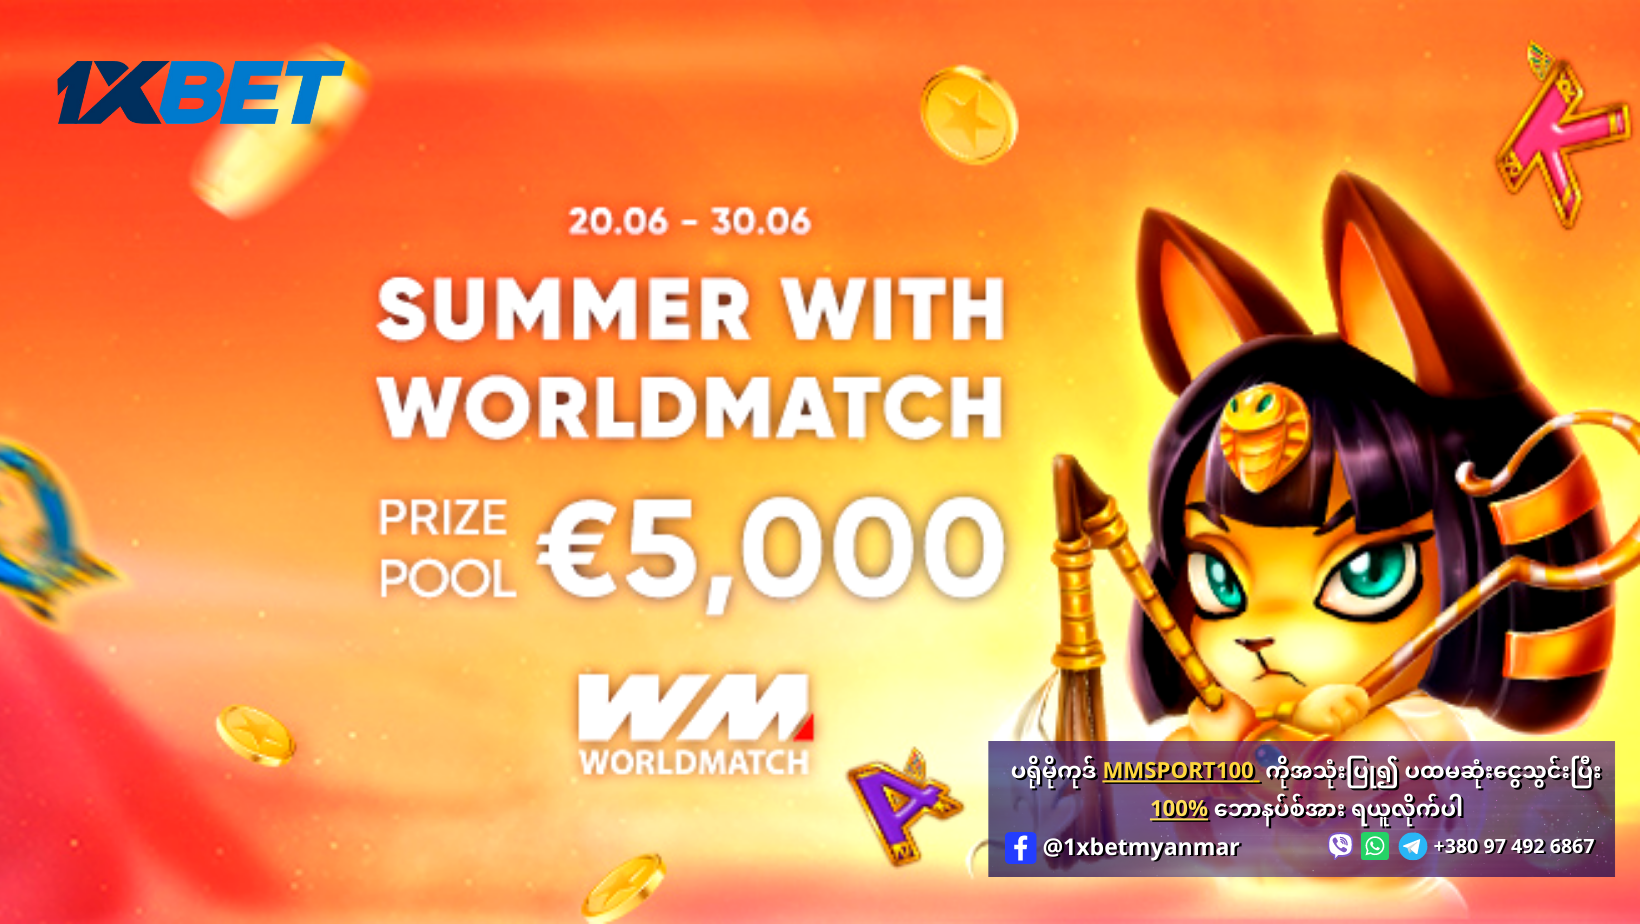 1xBet Summer With Worldmatch promotion